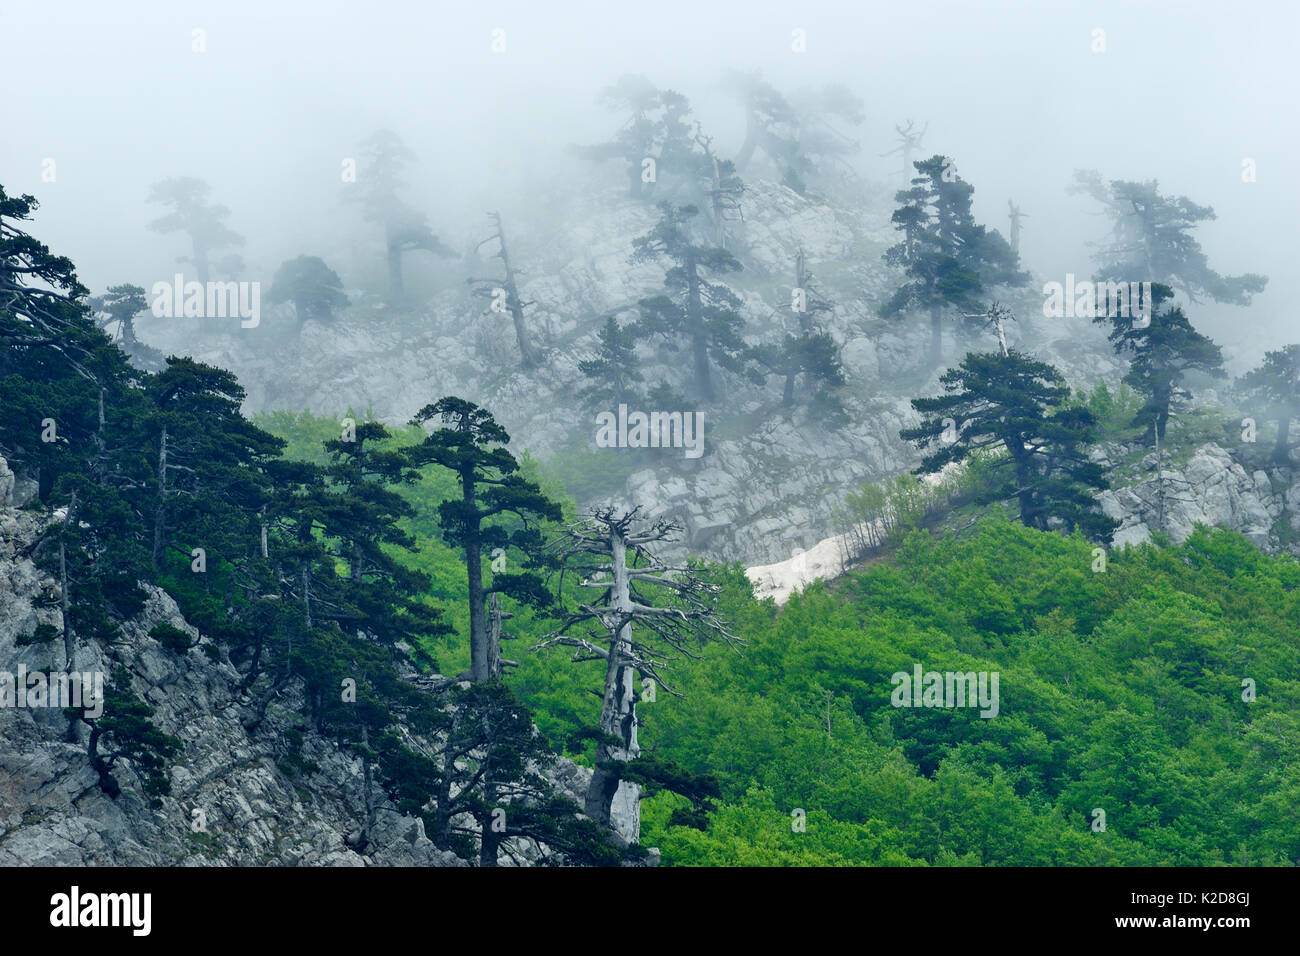 Monte Pollino and Cuirassed pine trees (Pinus leucodermis), Pollino National Park, Italy. June 2009. Stock Photo